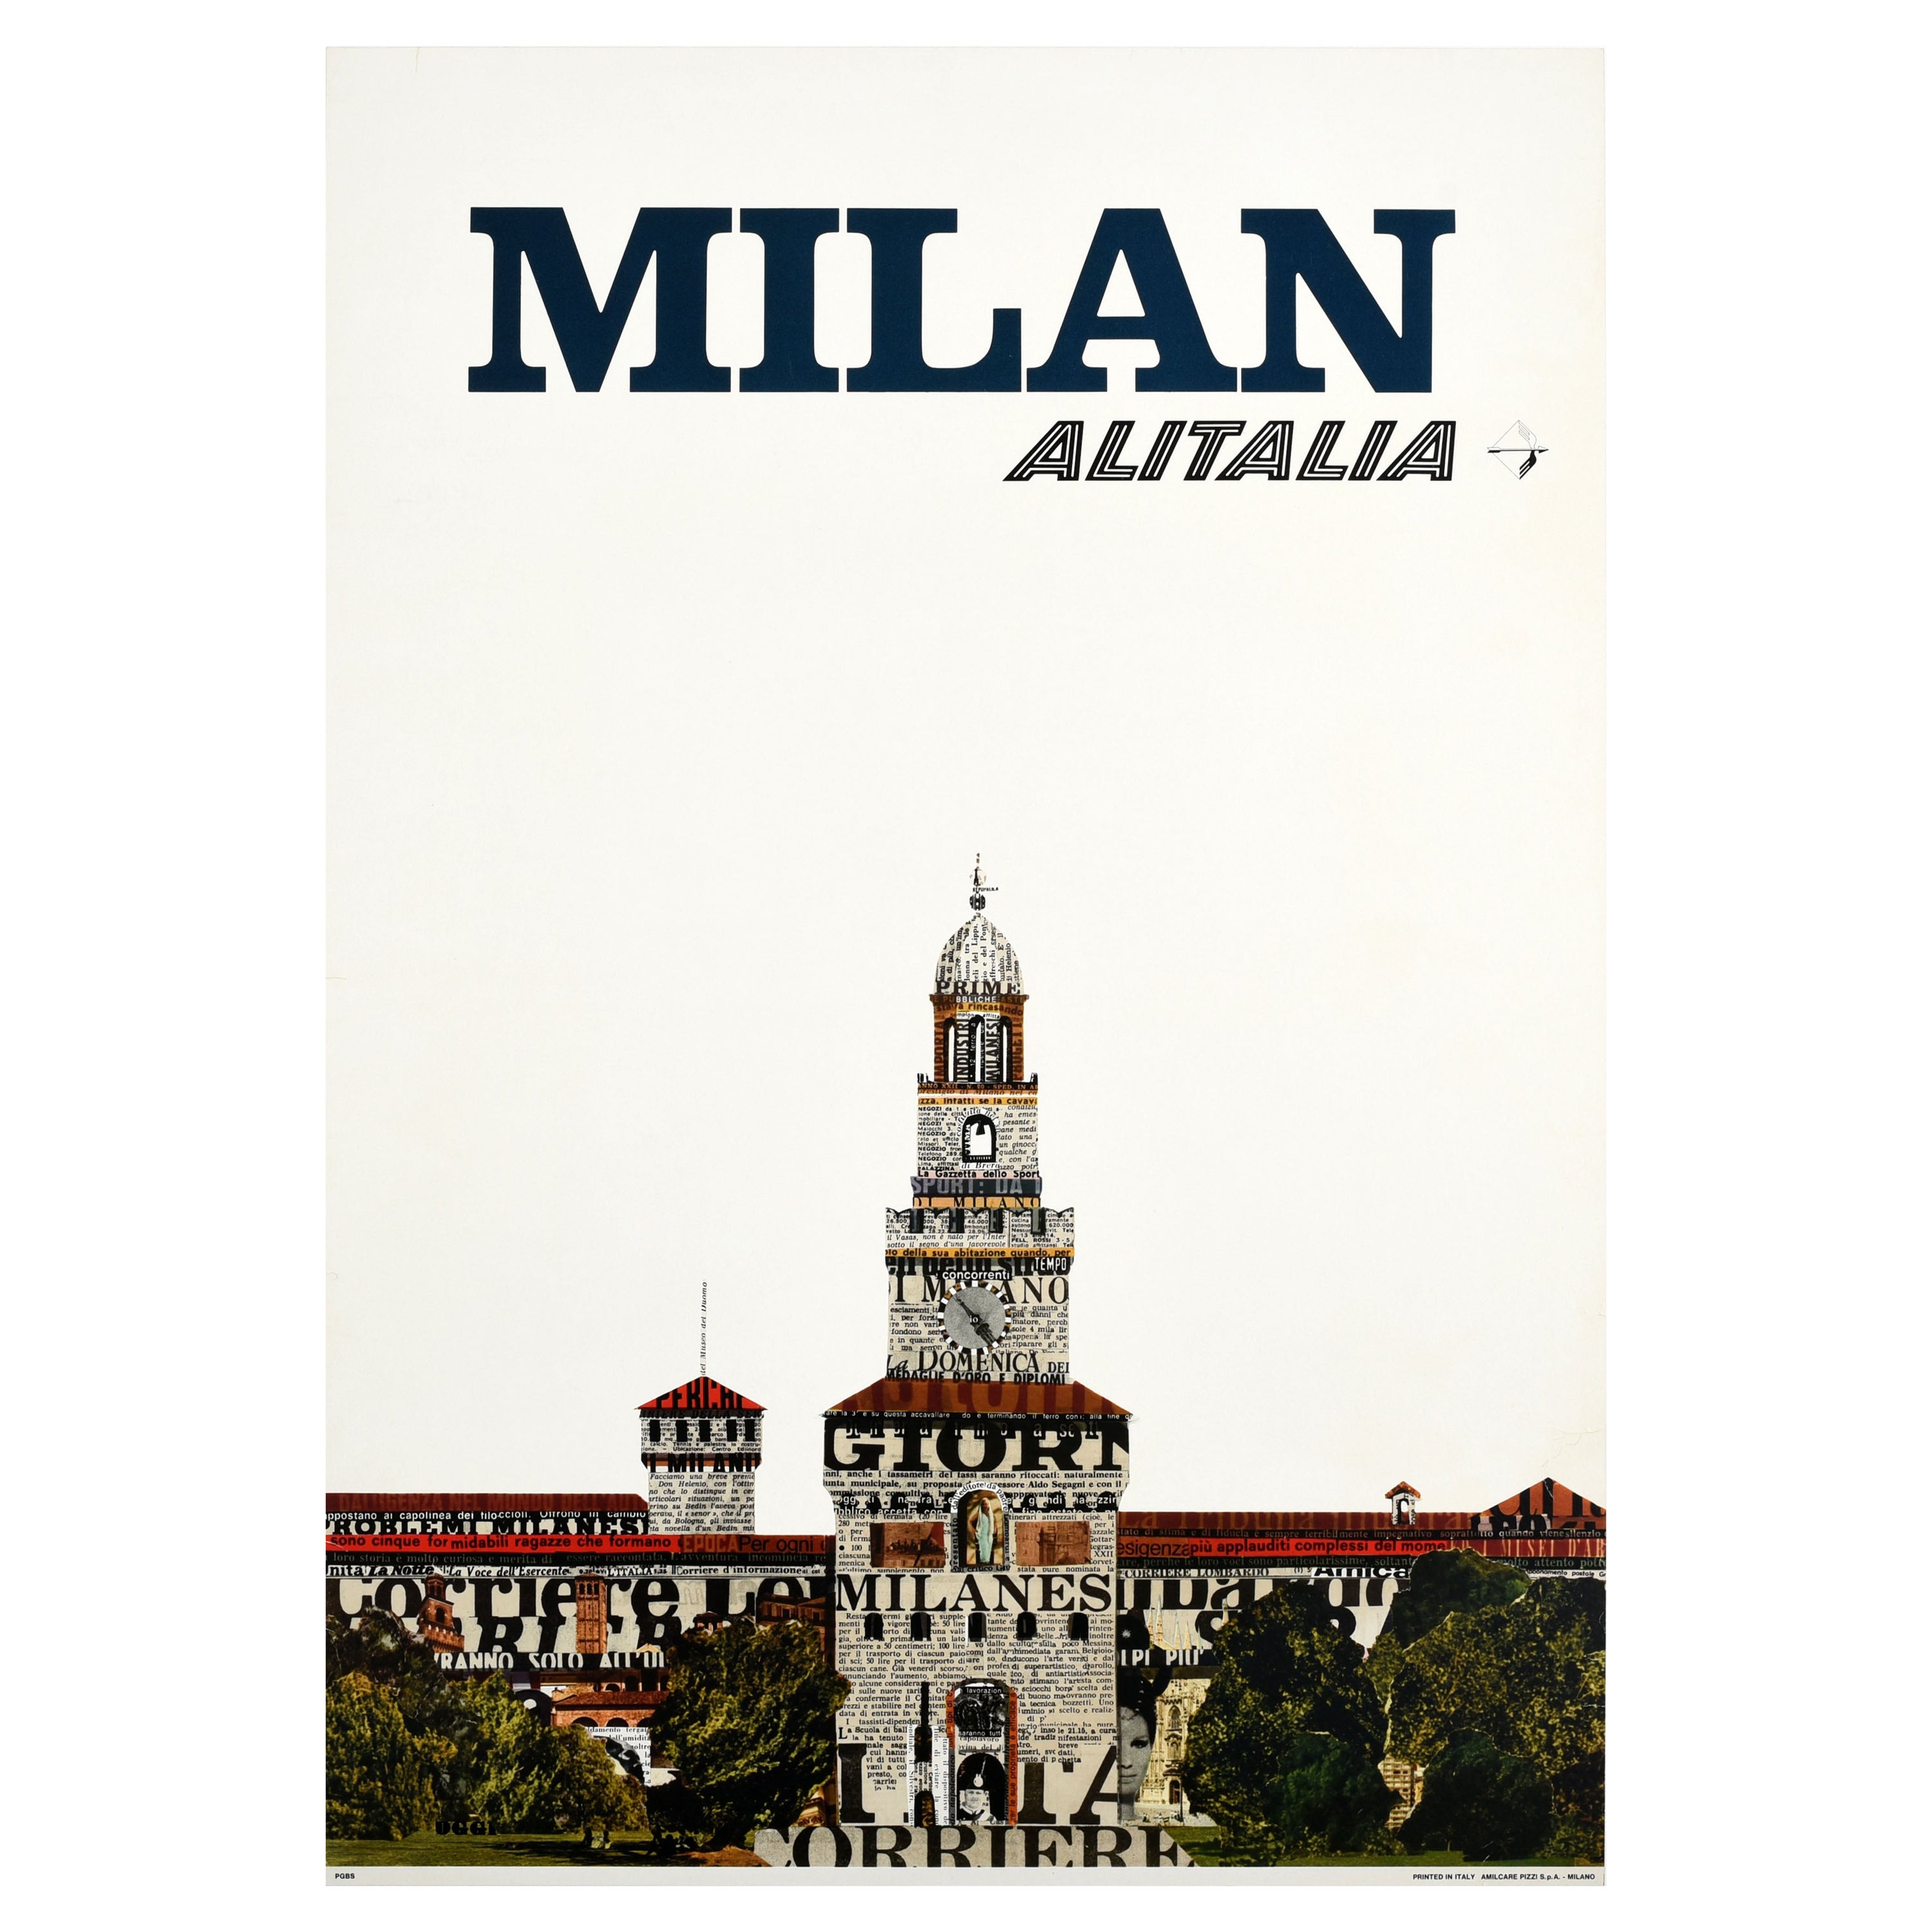 Original Vintage Travel Poster For Milan Italy Alitalia Airline Collage Design